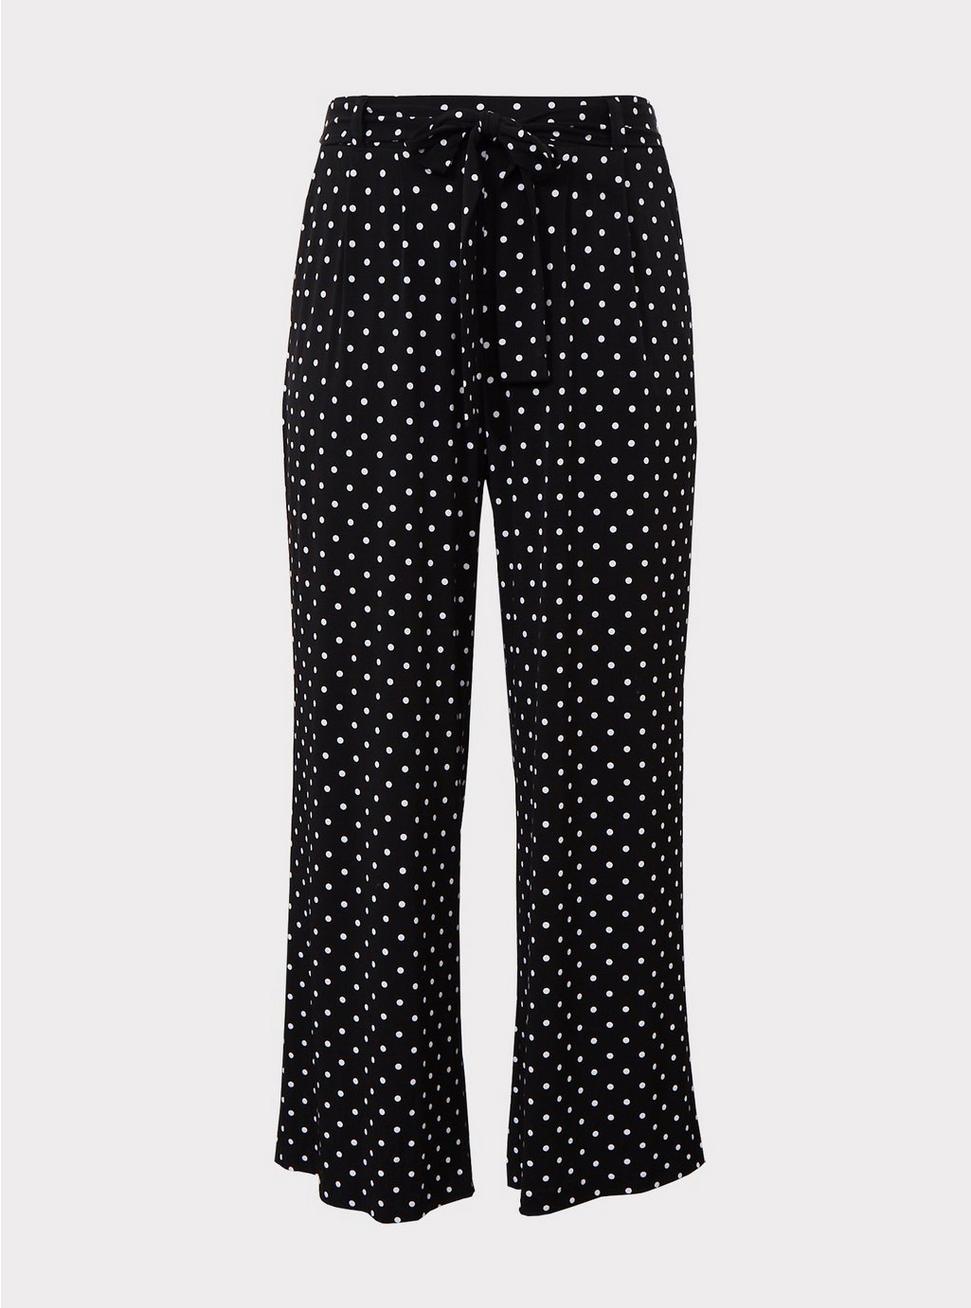 Plus Size - Black Polka Dot Studio Knit Tie Front Wide Leg Pant - Torrid